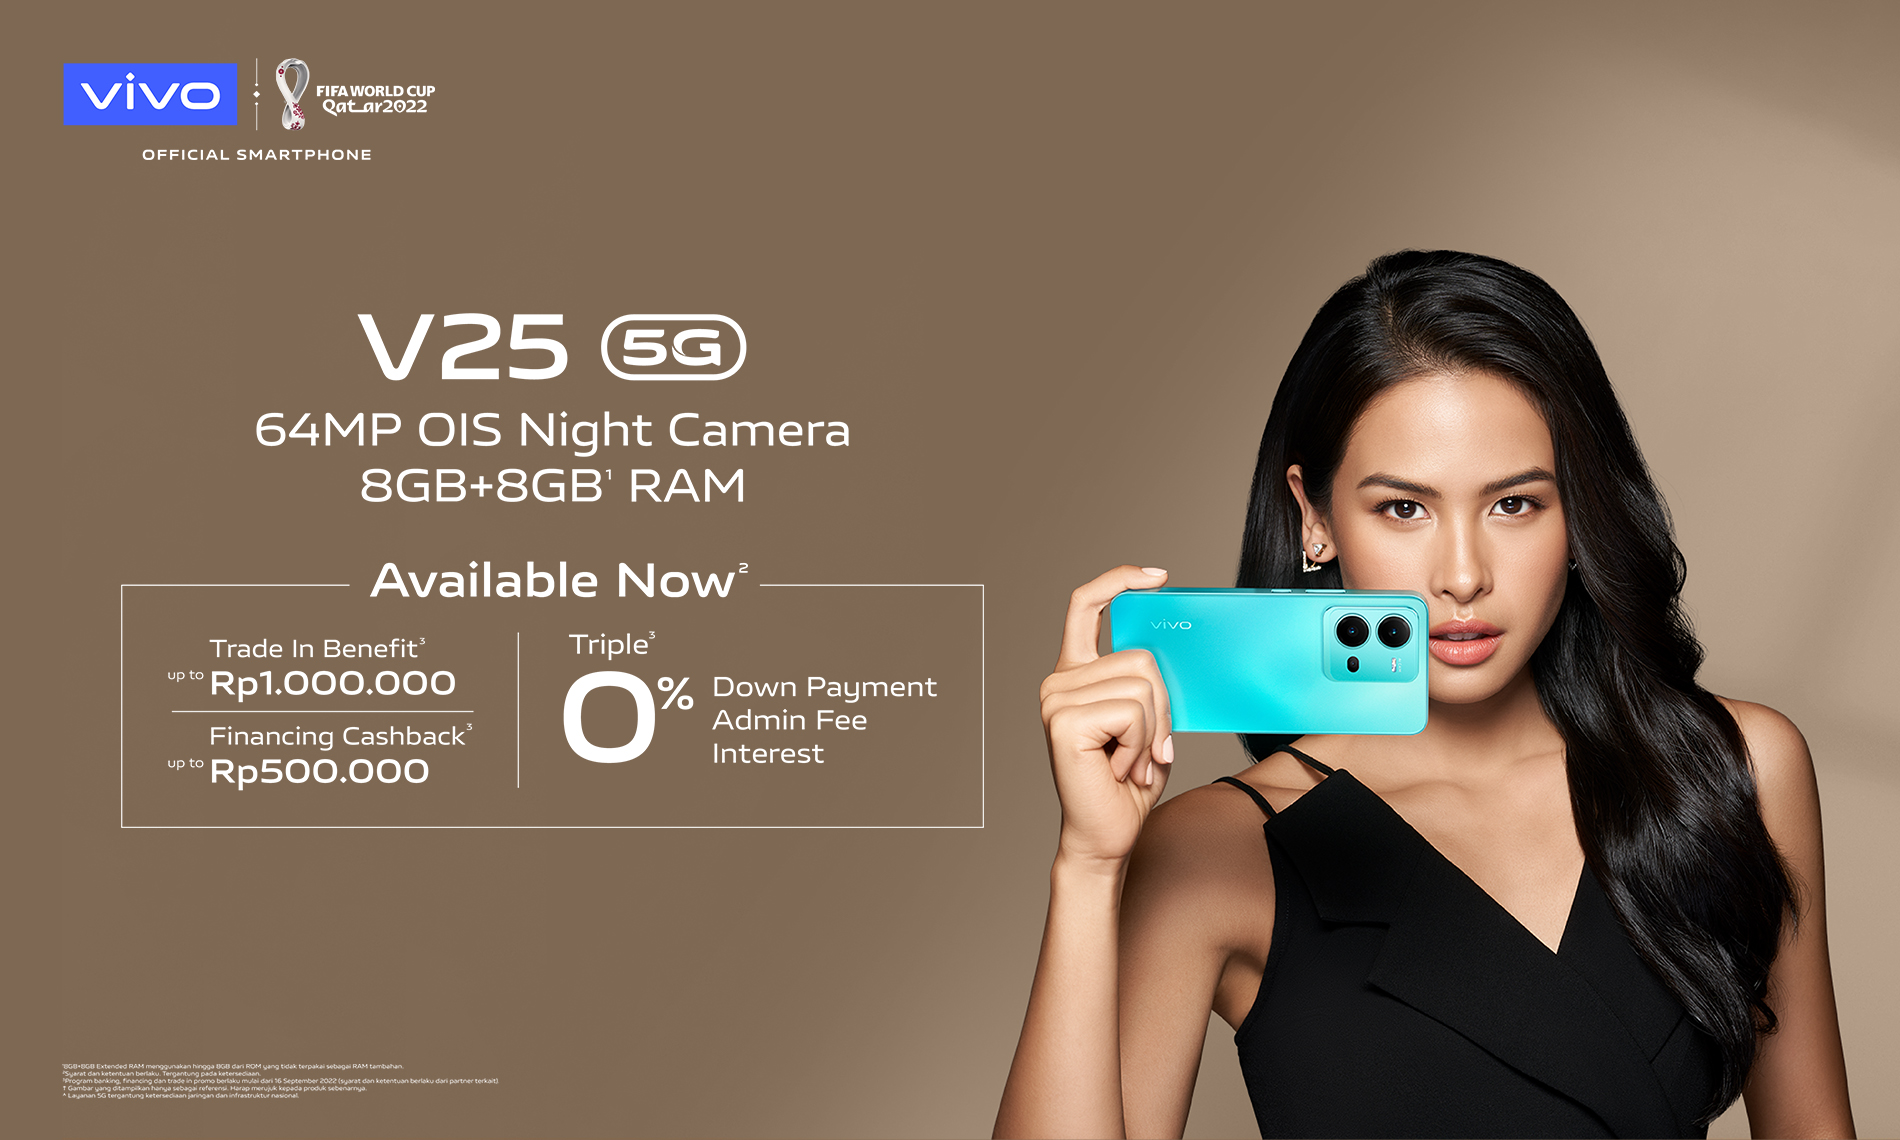 Available Now! vivo V25 5G Smartphone Super Canggih Terbaru vivo #LifeIsCinematic